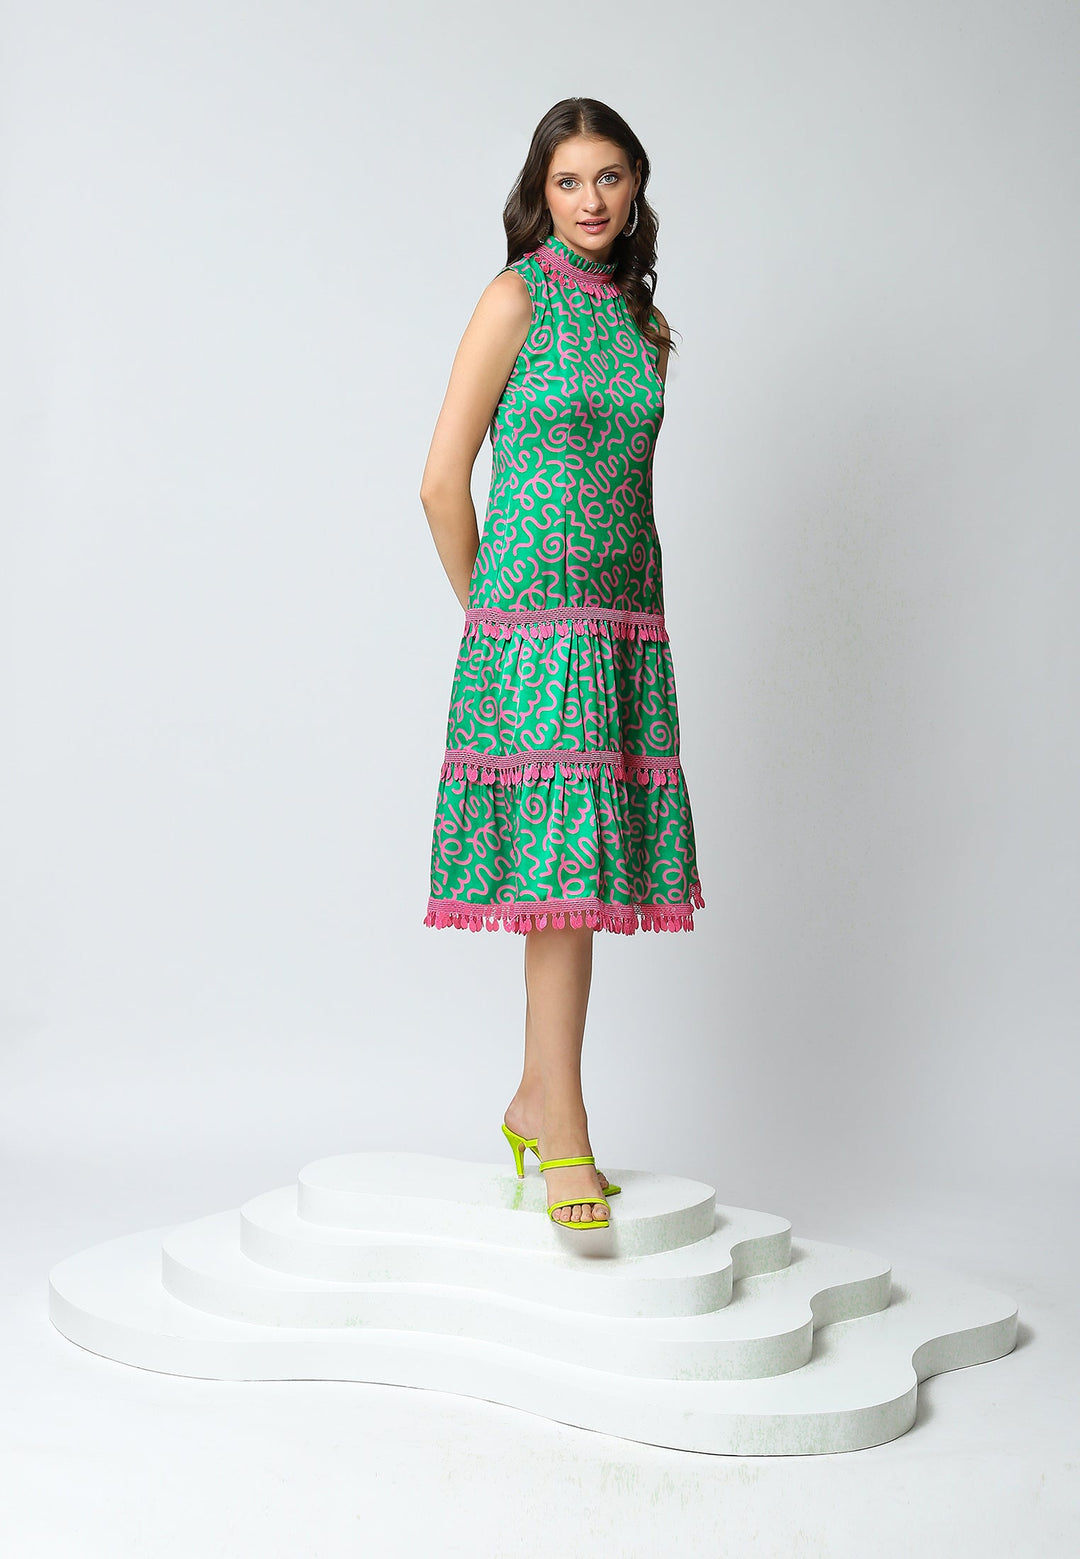 Nriti Shah in 'Dubrovnik Harmony' Midi Dress